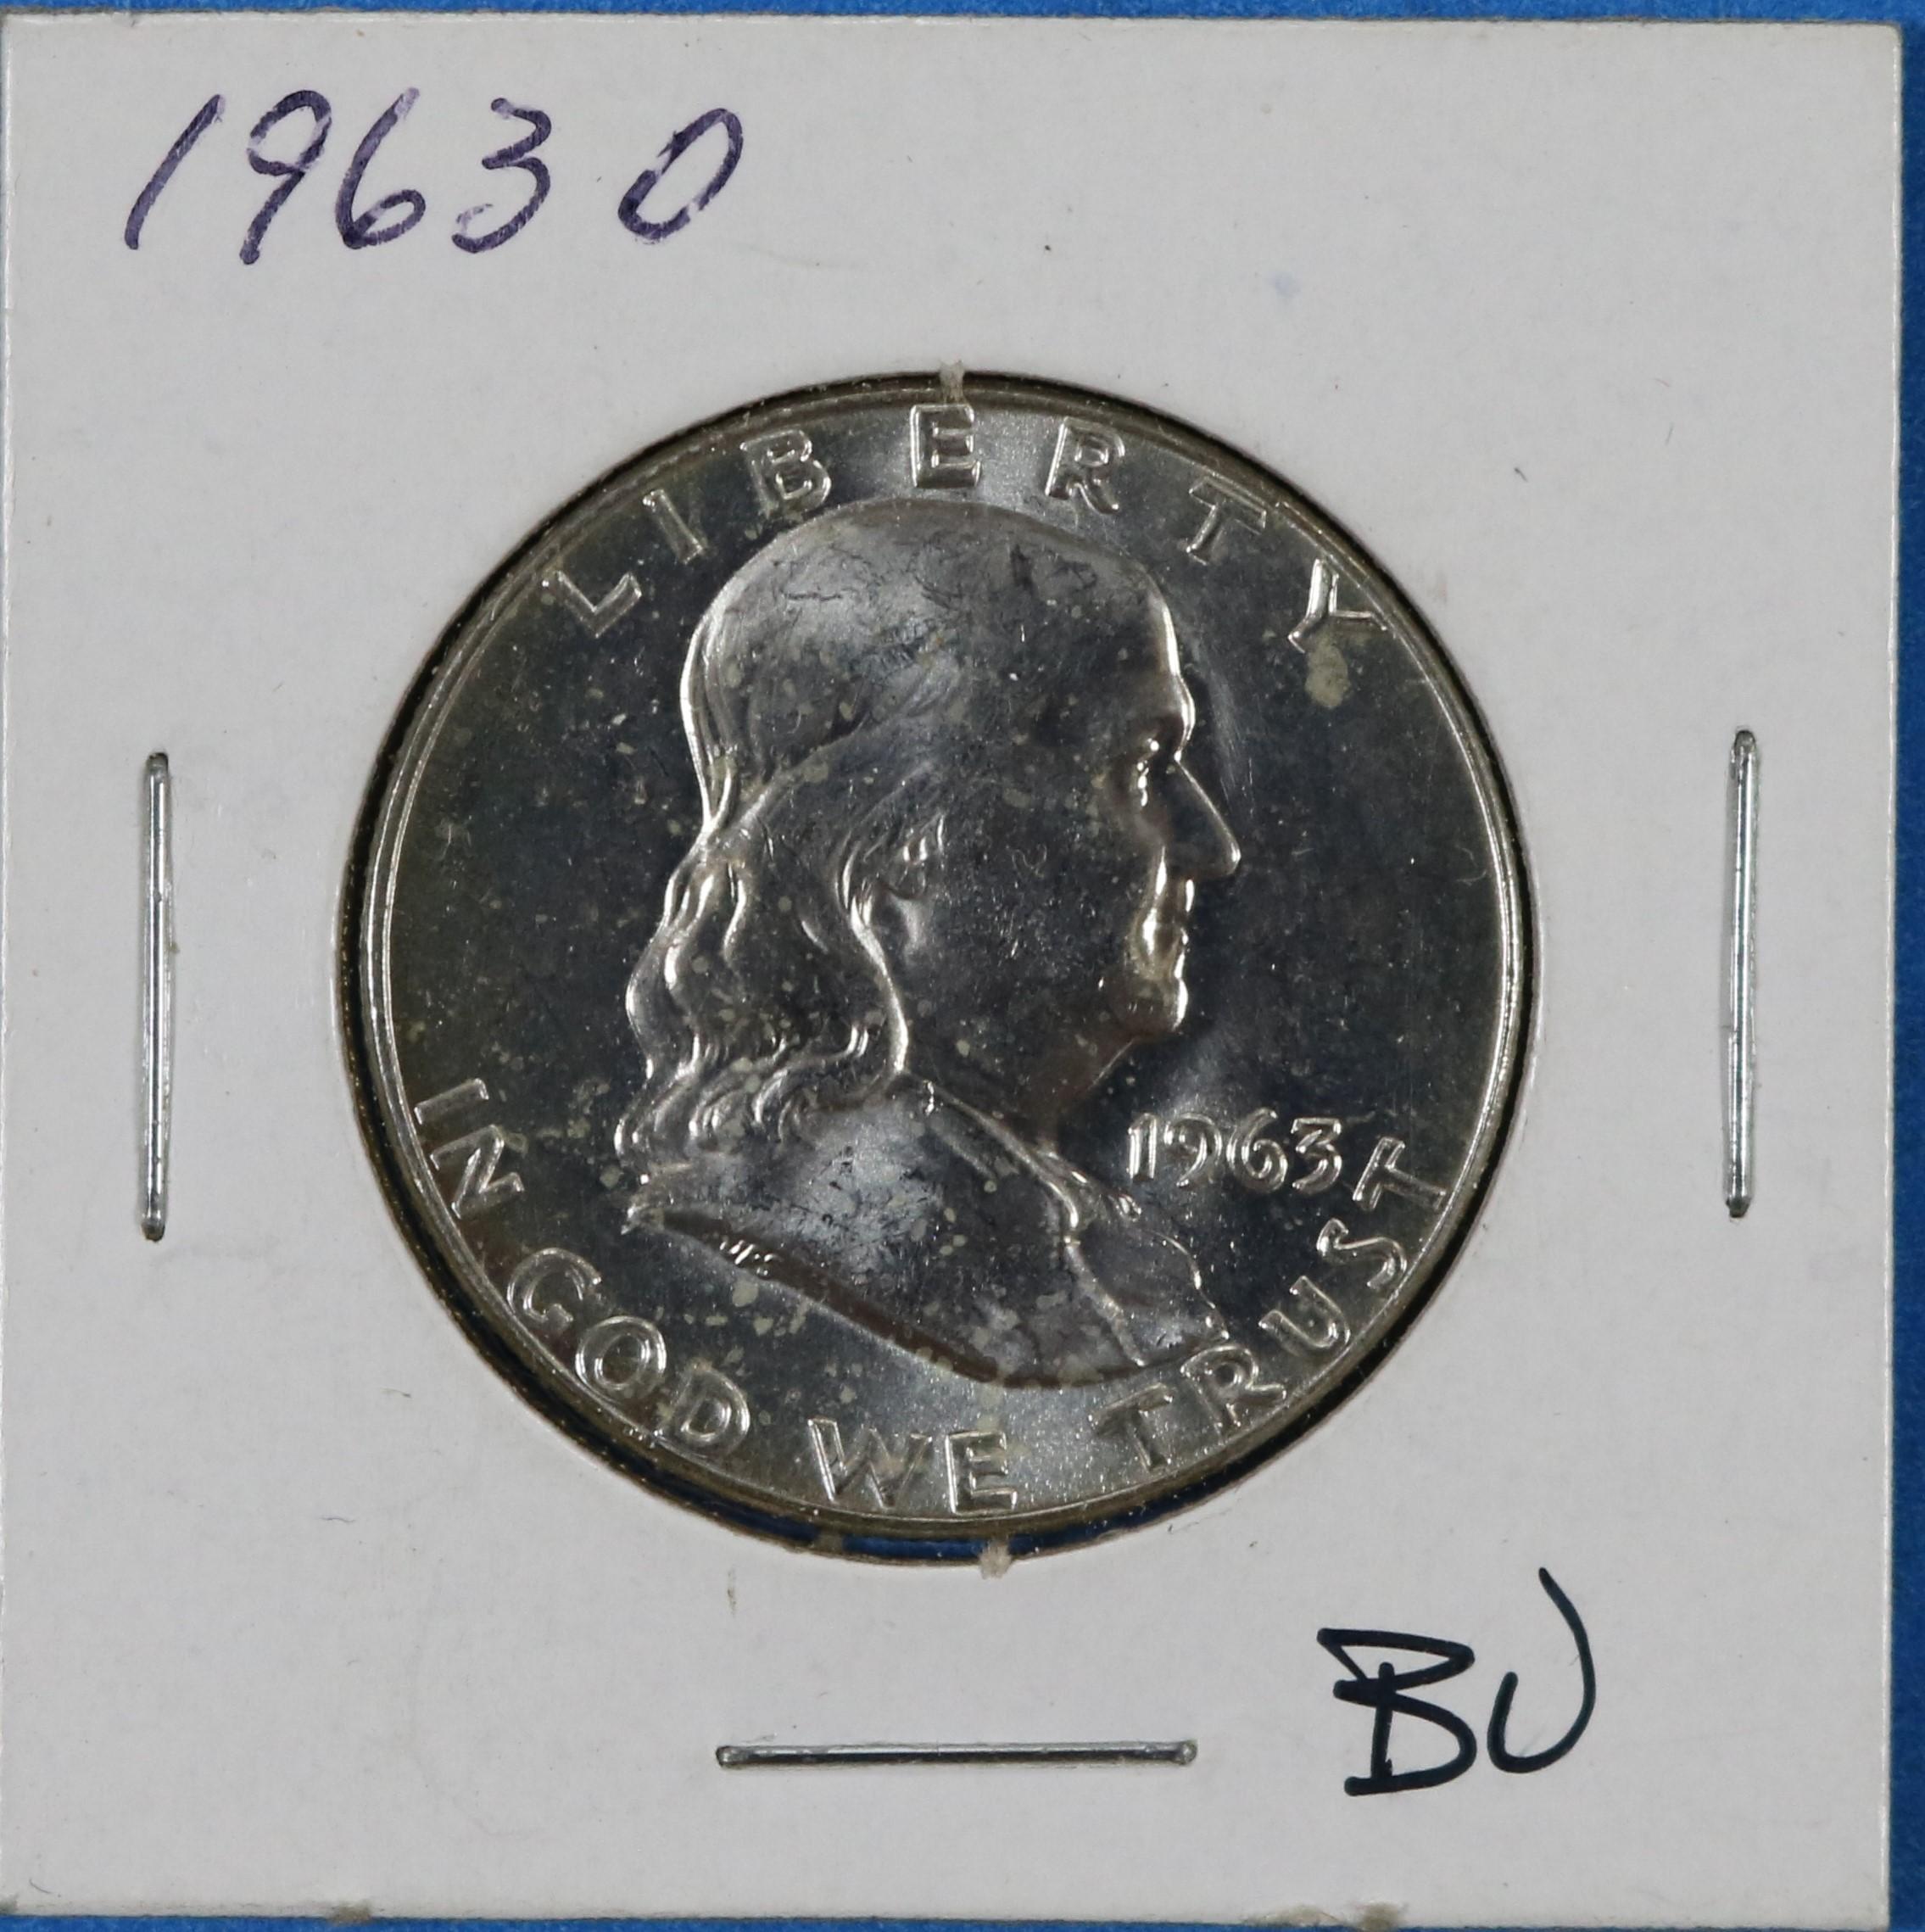 1963 D Franklin Half Silver Dollar